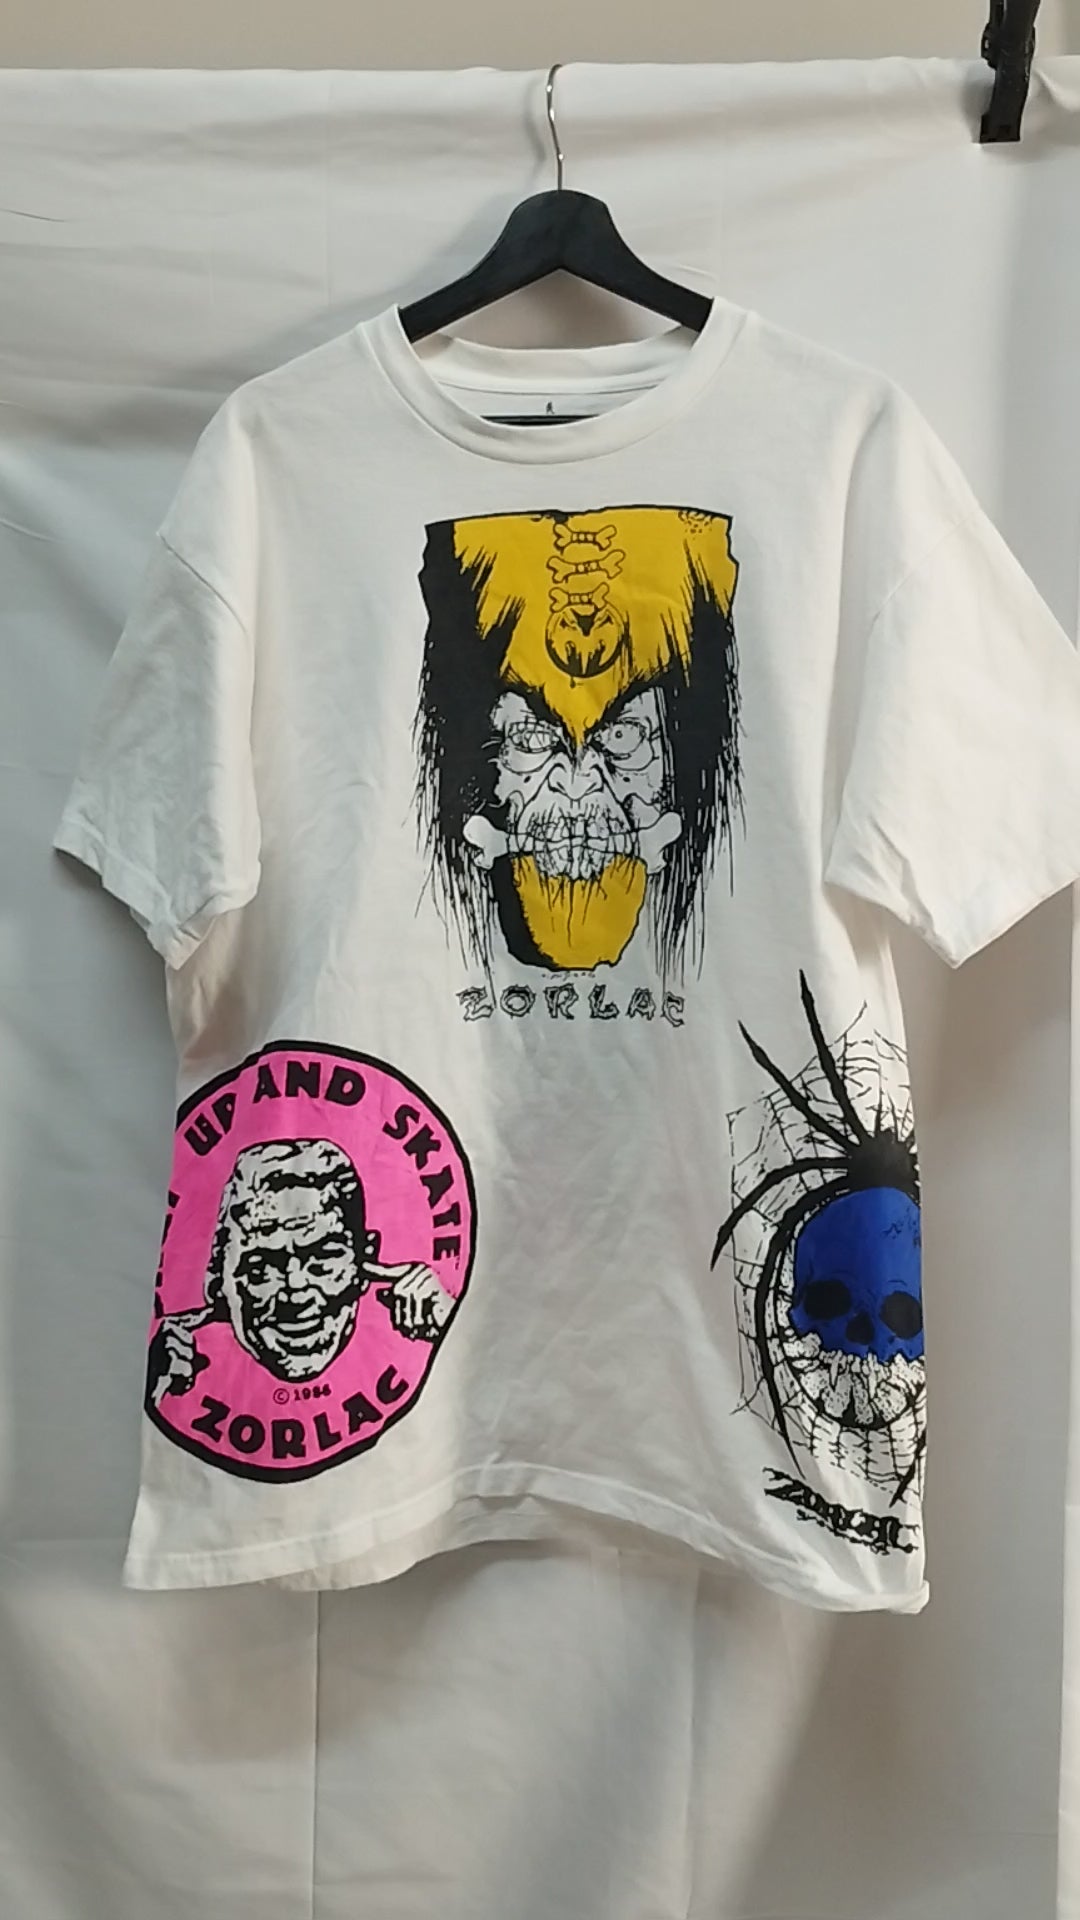 Zorlac Skateboards "Shut Up and Skate" - AOP OVP all over print T shirt - Vintage Band Shirts